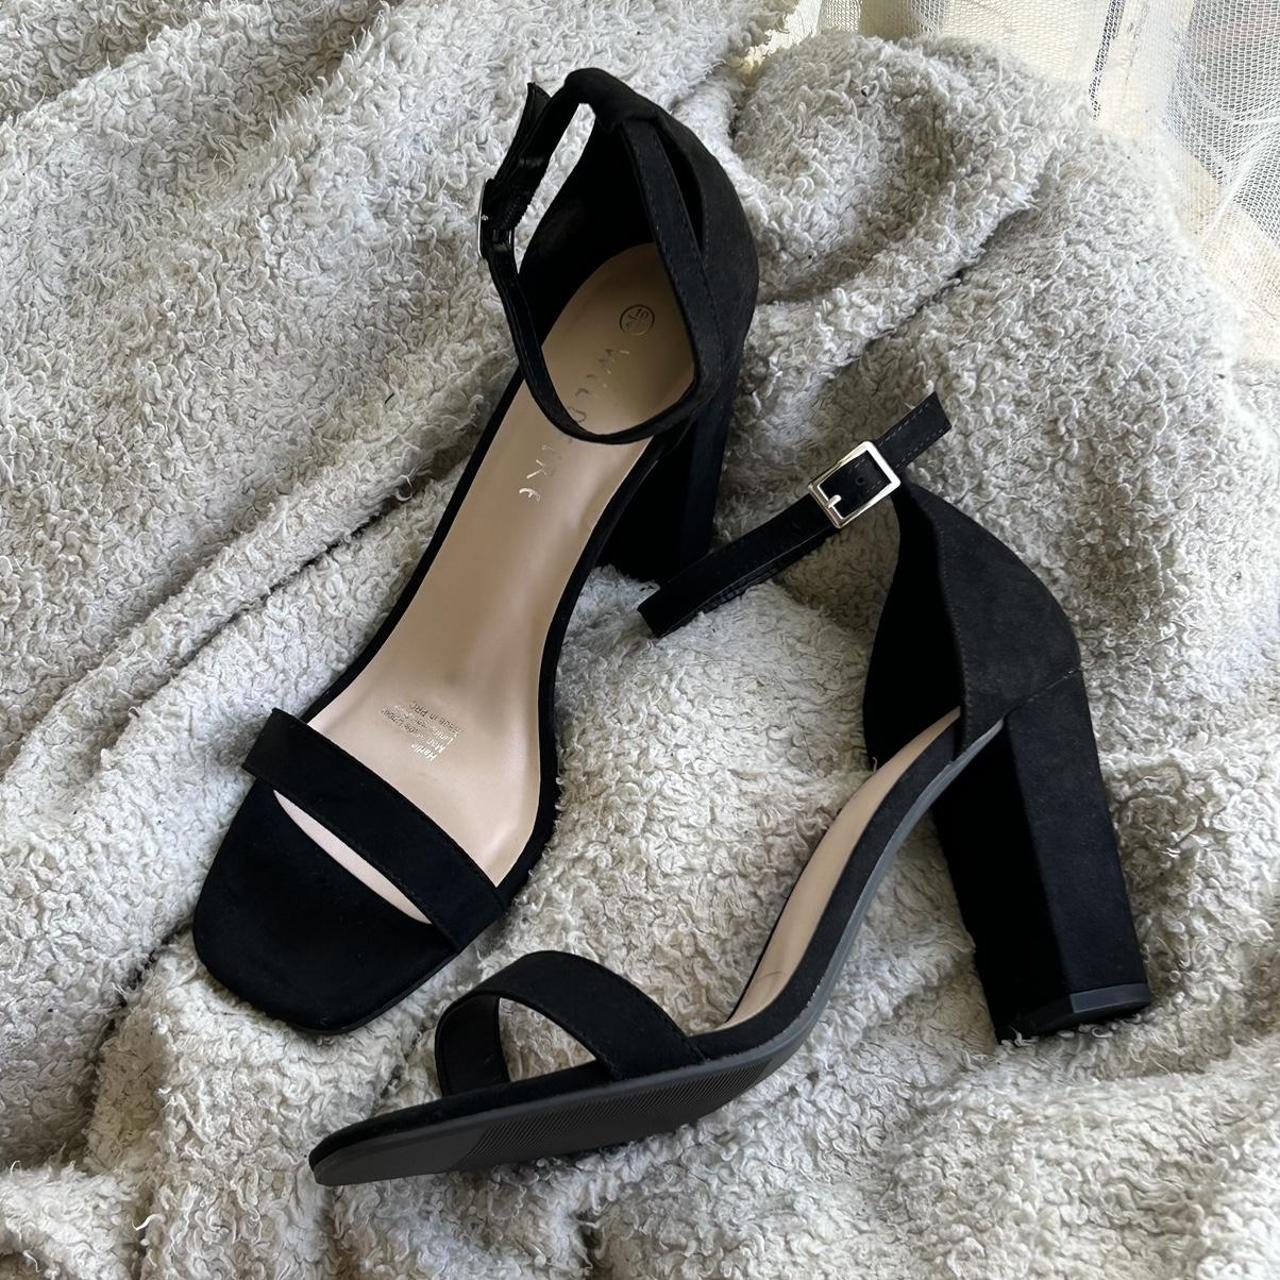 Spendless shoes black suede heels — size 10/41 never... - Depop